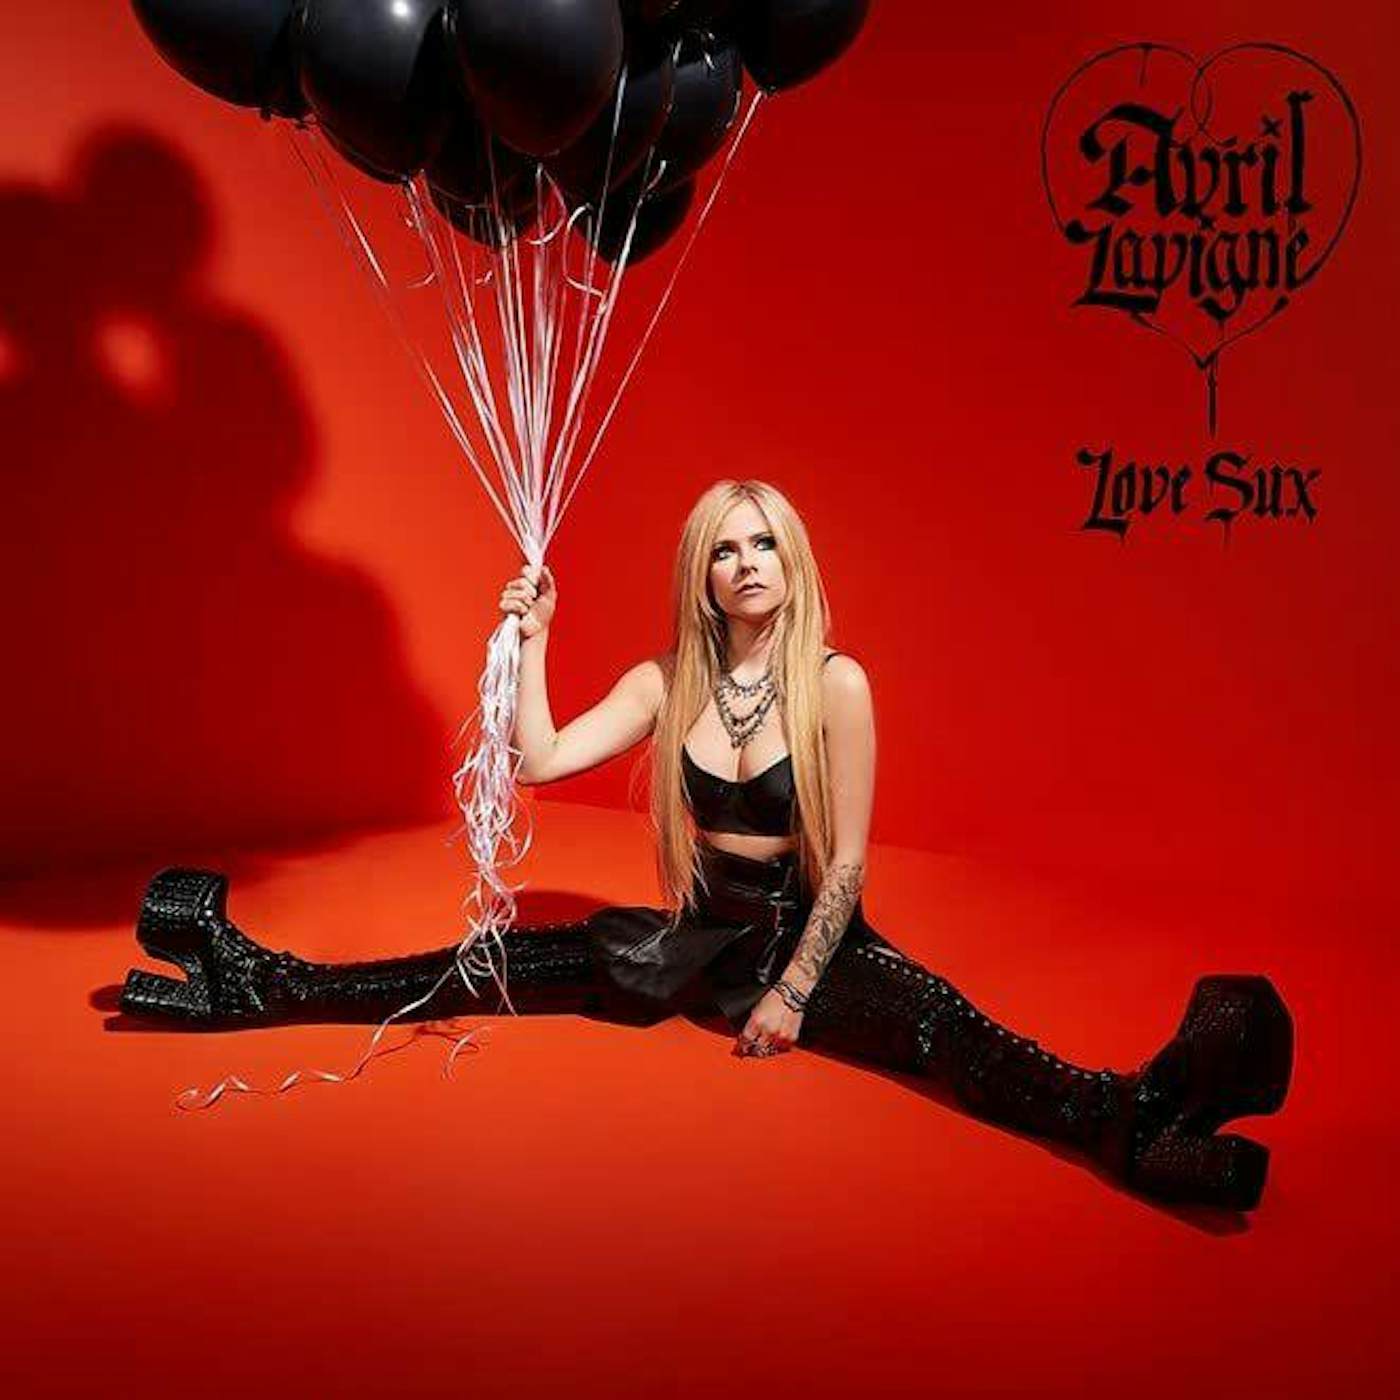 Avril Lavigne Let Go 20th Anniversary Edition 2LP Japan exclusive White  Vinyl - Young Vinyl